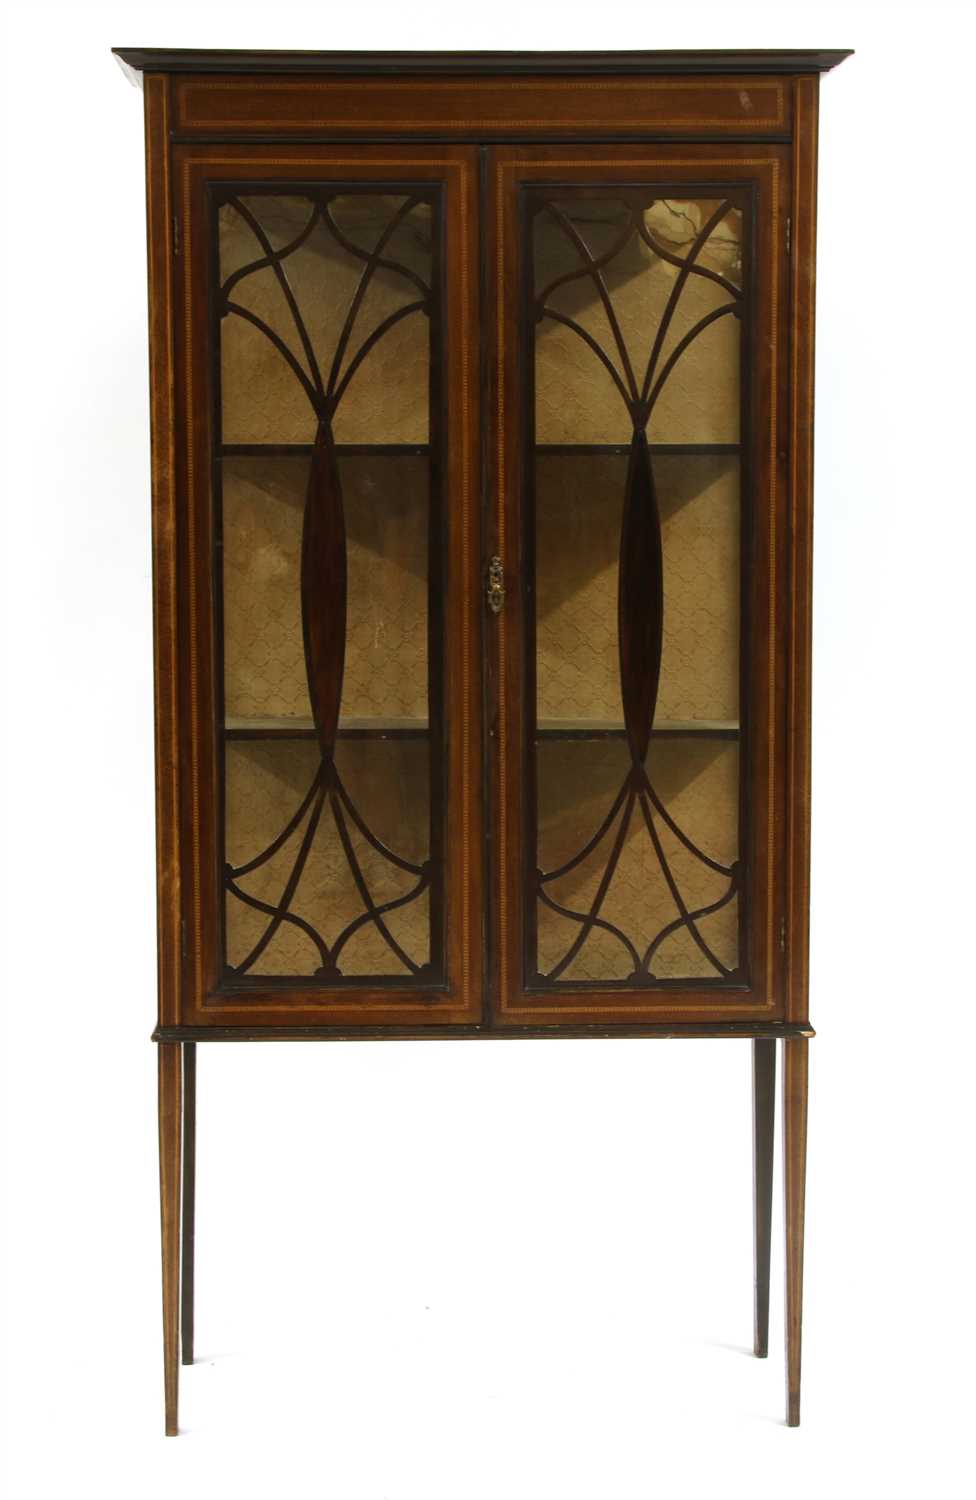 Lot 269 - An Edwardian inlaid mahogany display cabinet